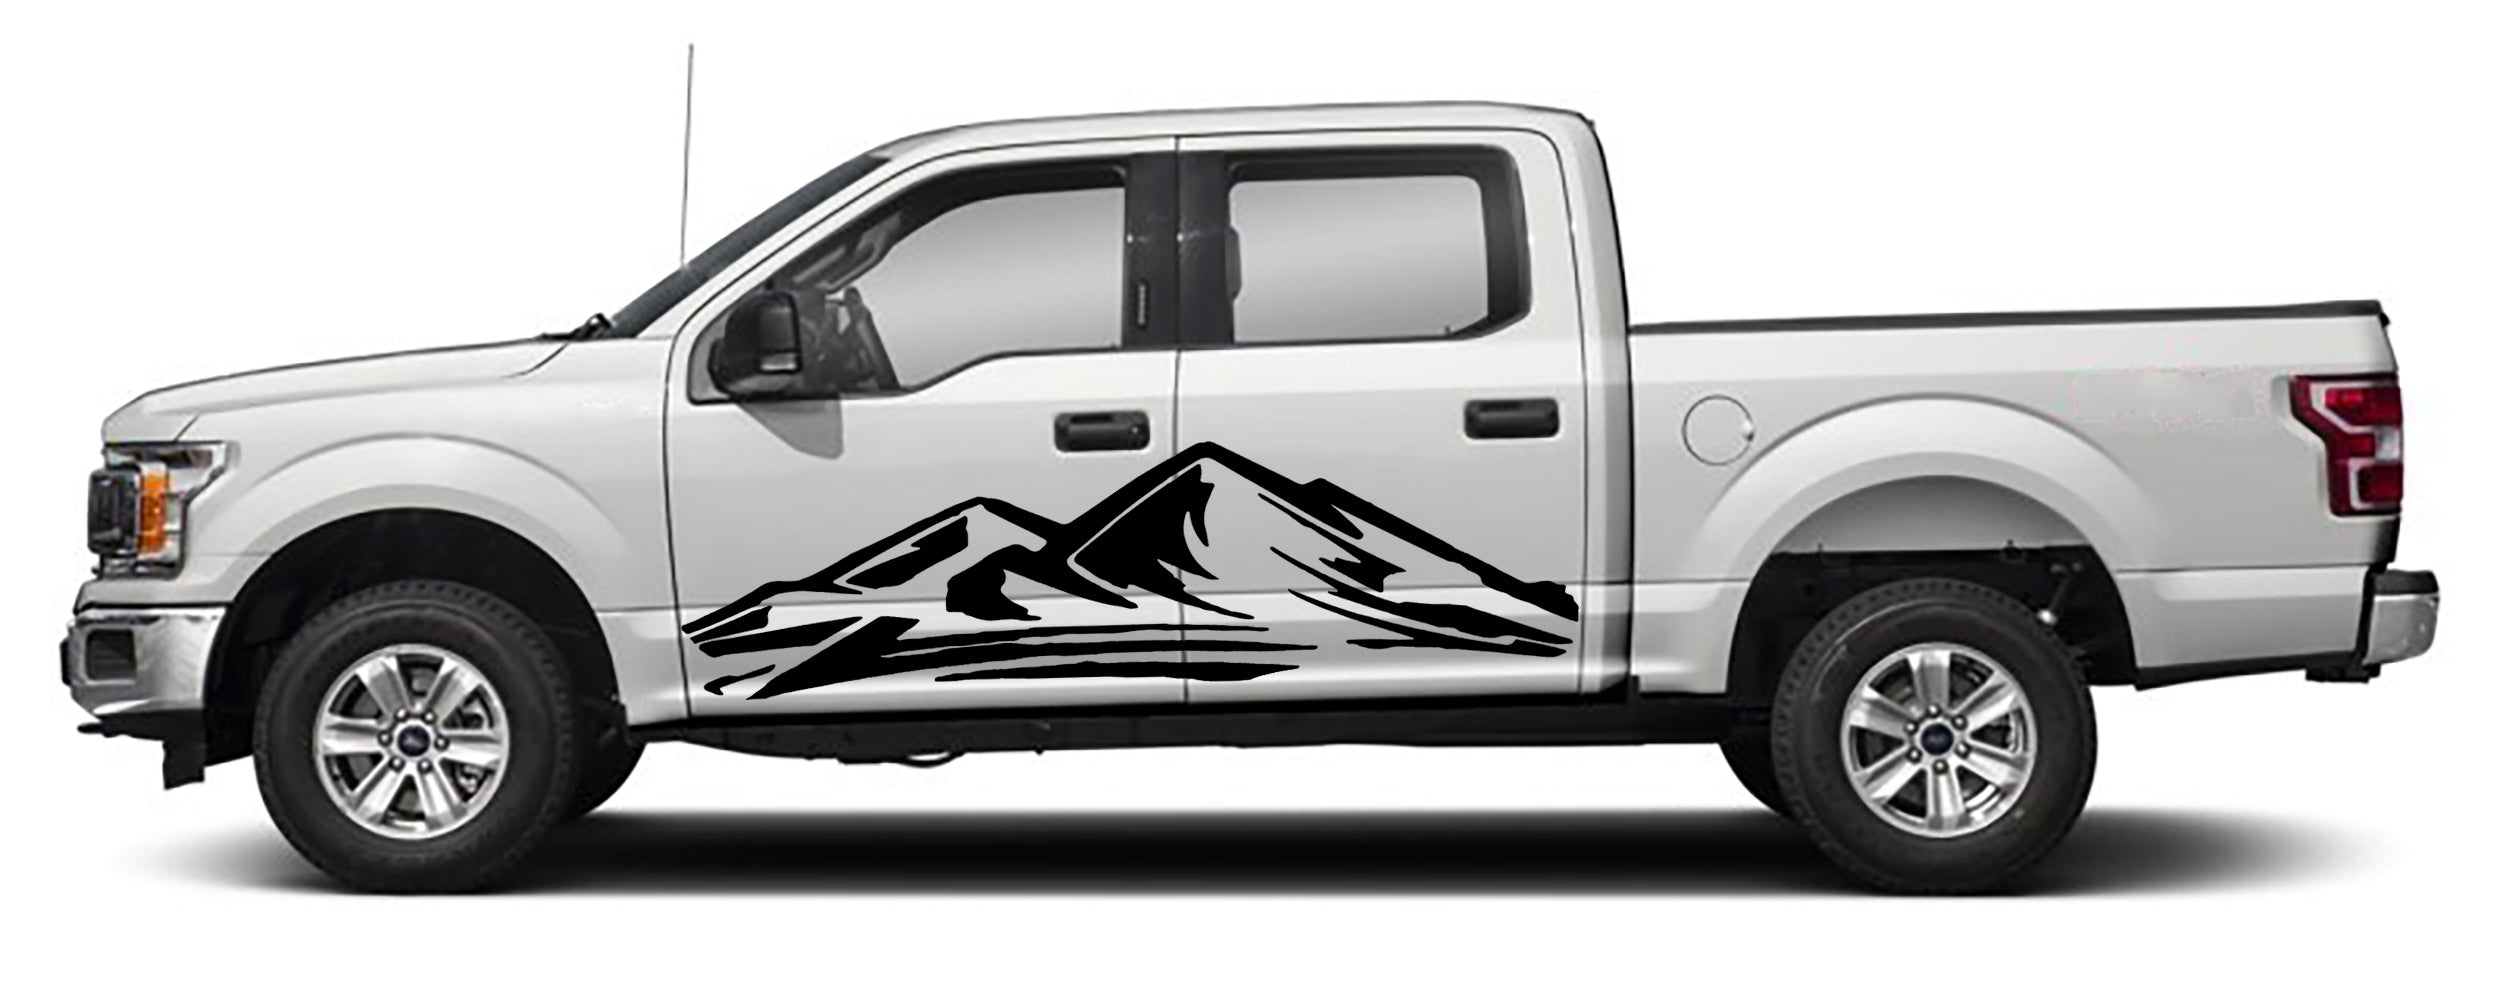 Ford F-150 Giant Mountain Mount Door Decals (Pair) : Vinyl Graphics Kit Fits (2015-2020)